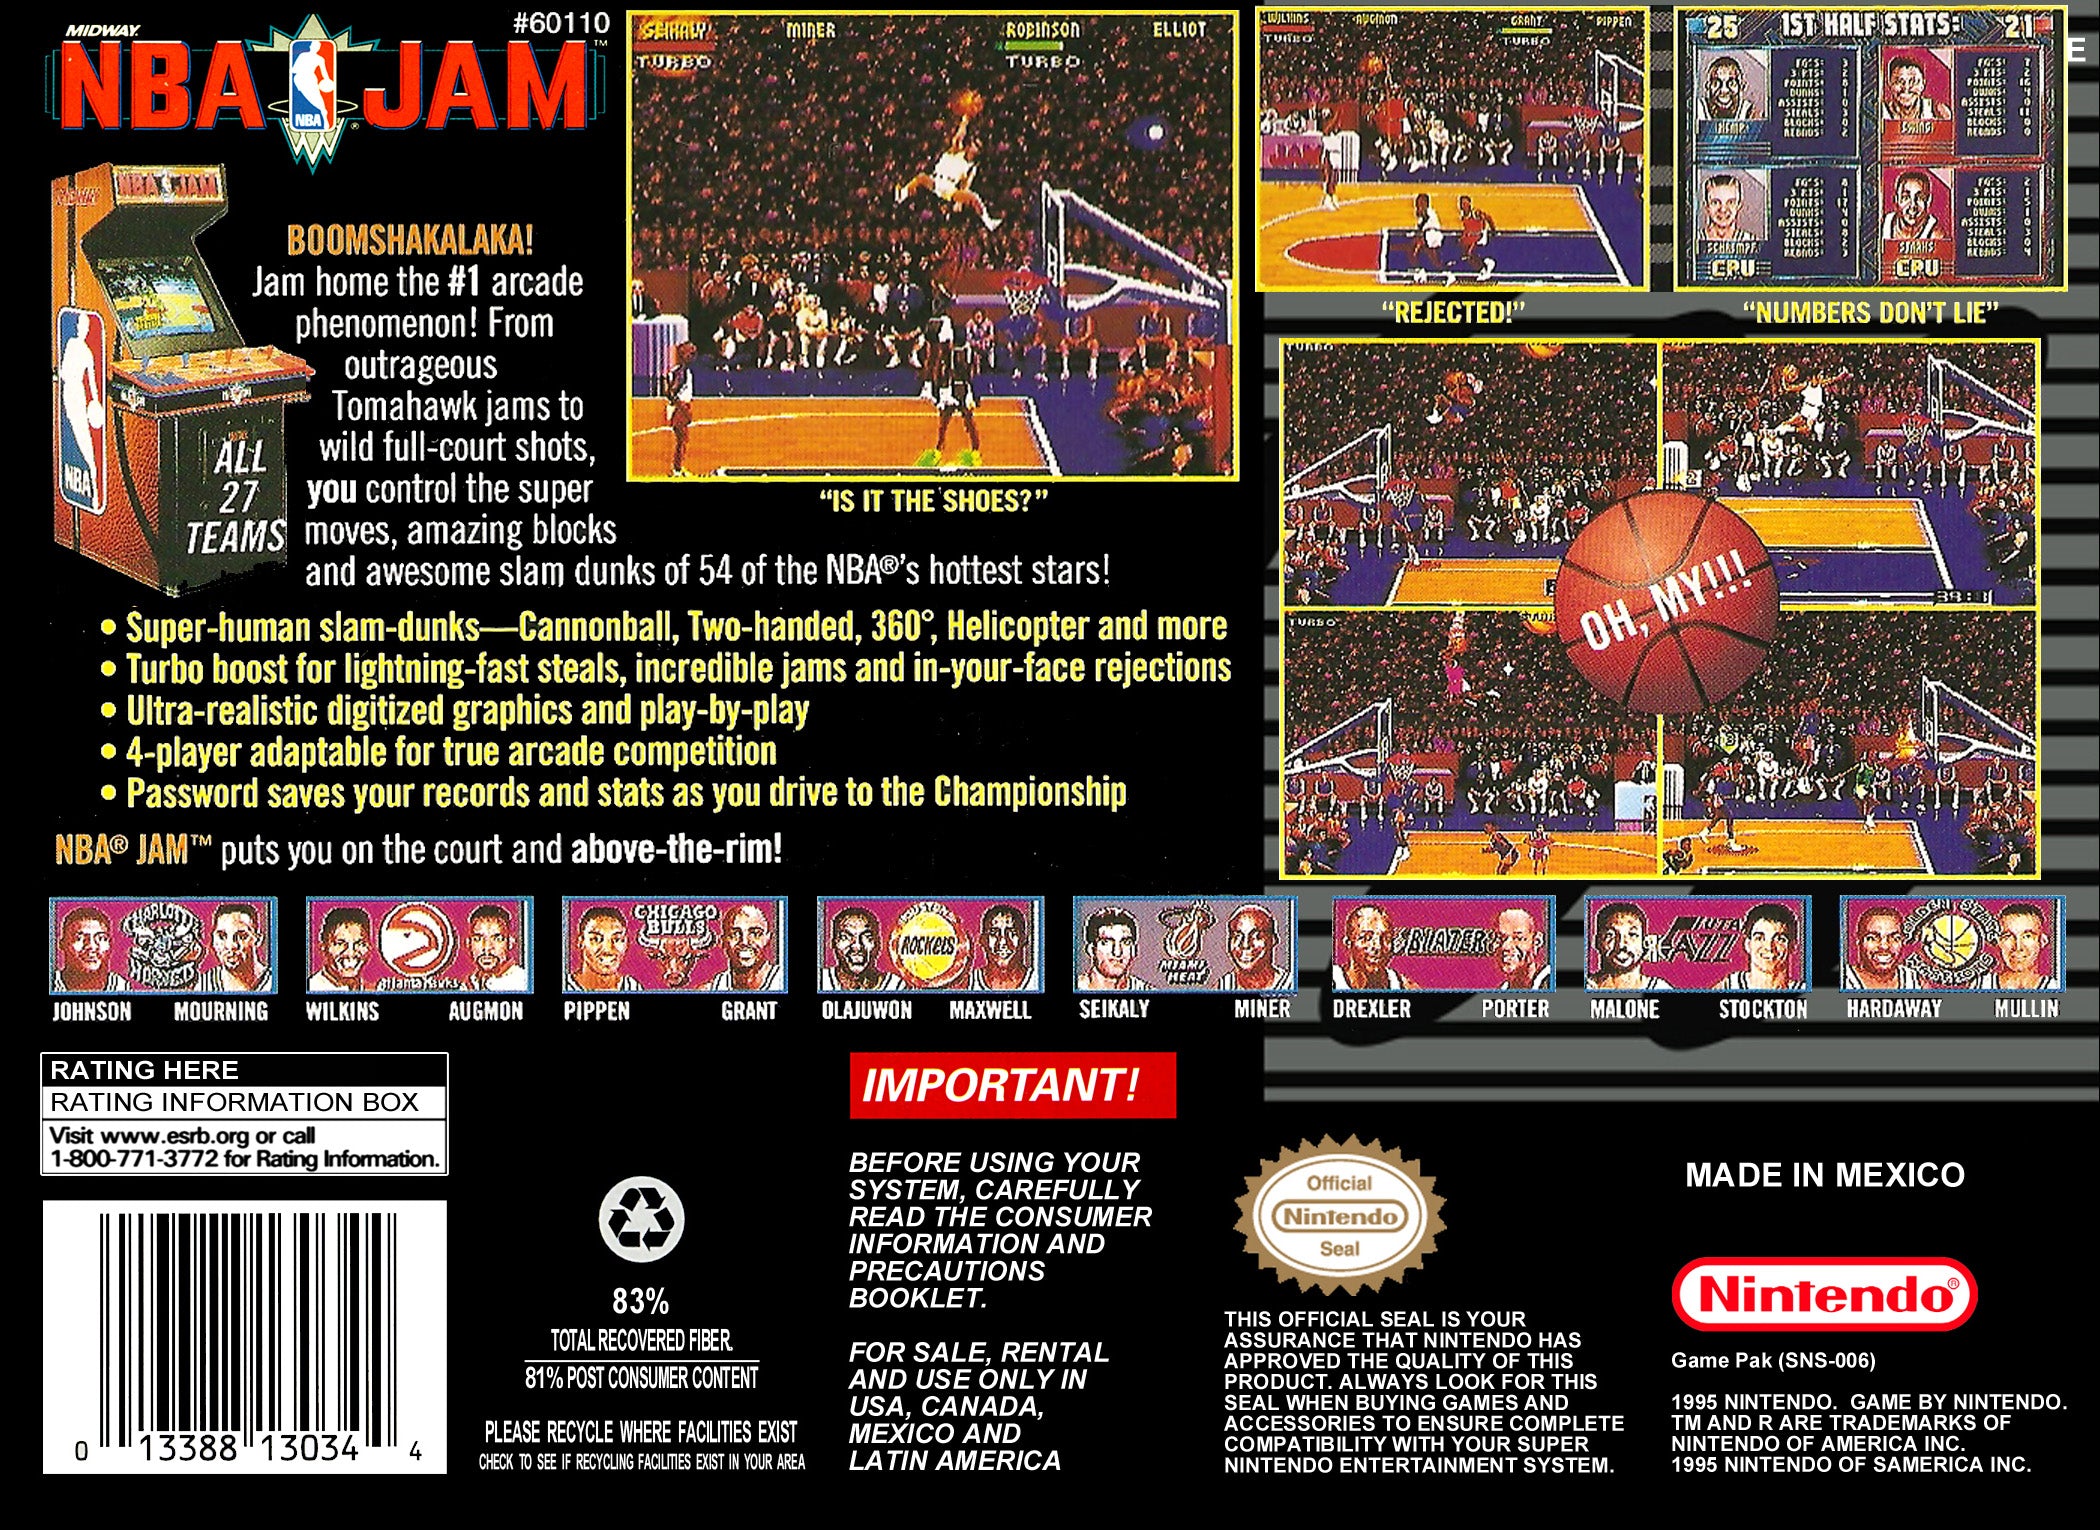 NBA Jam - Super Nintendo (SNES) Game Cartridge